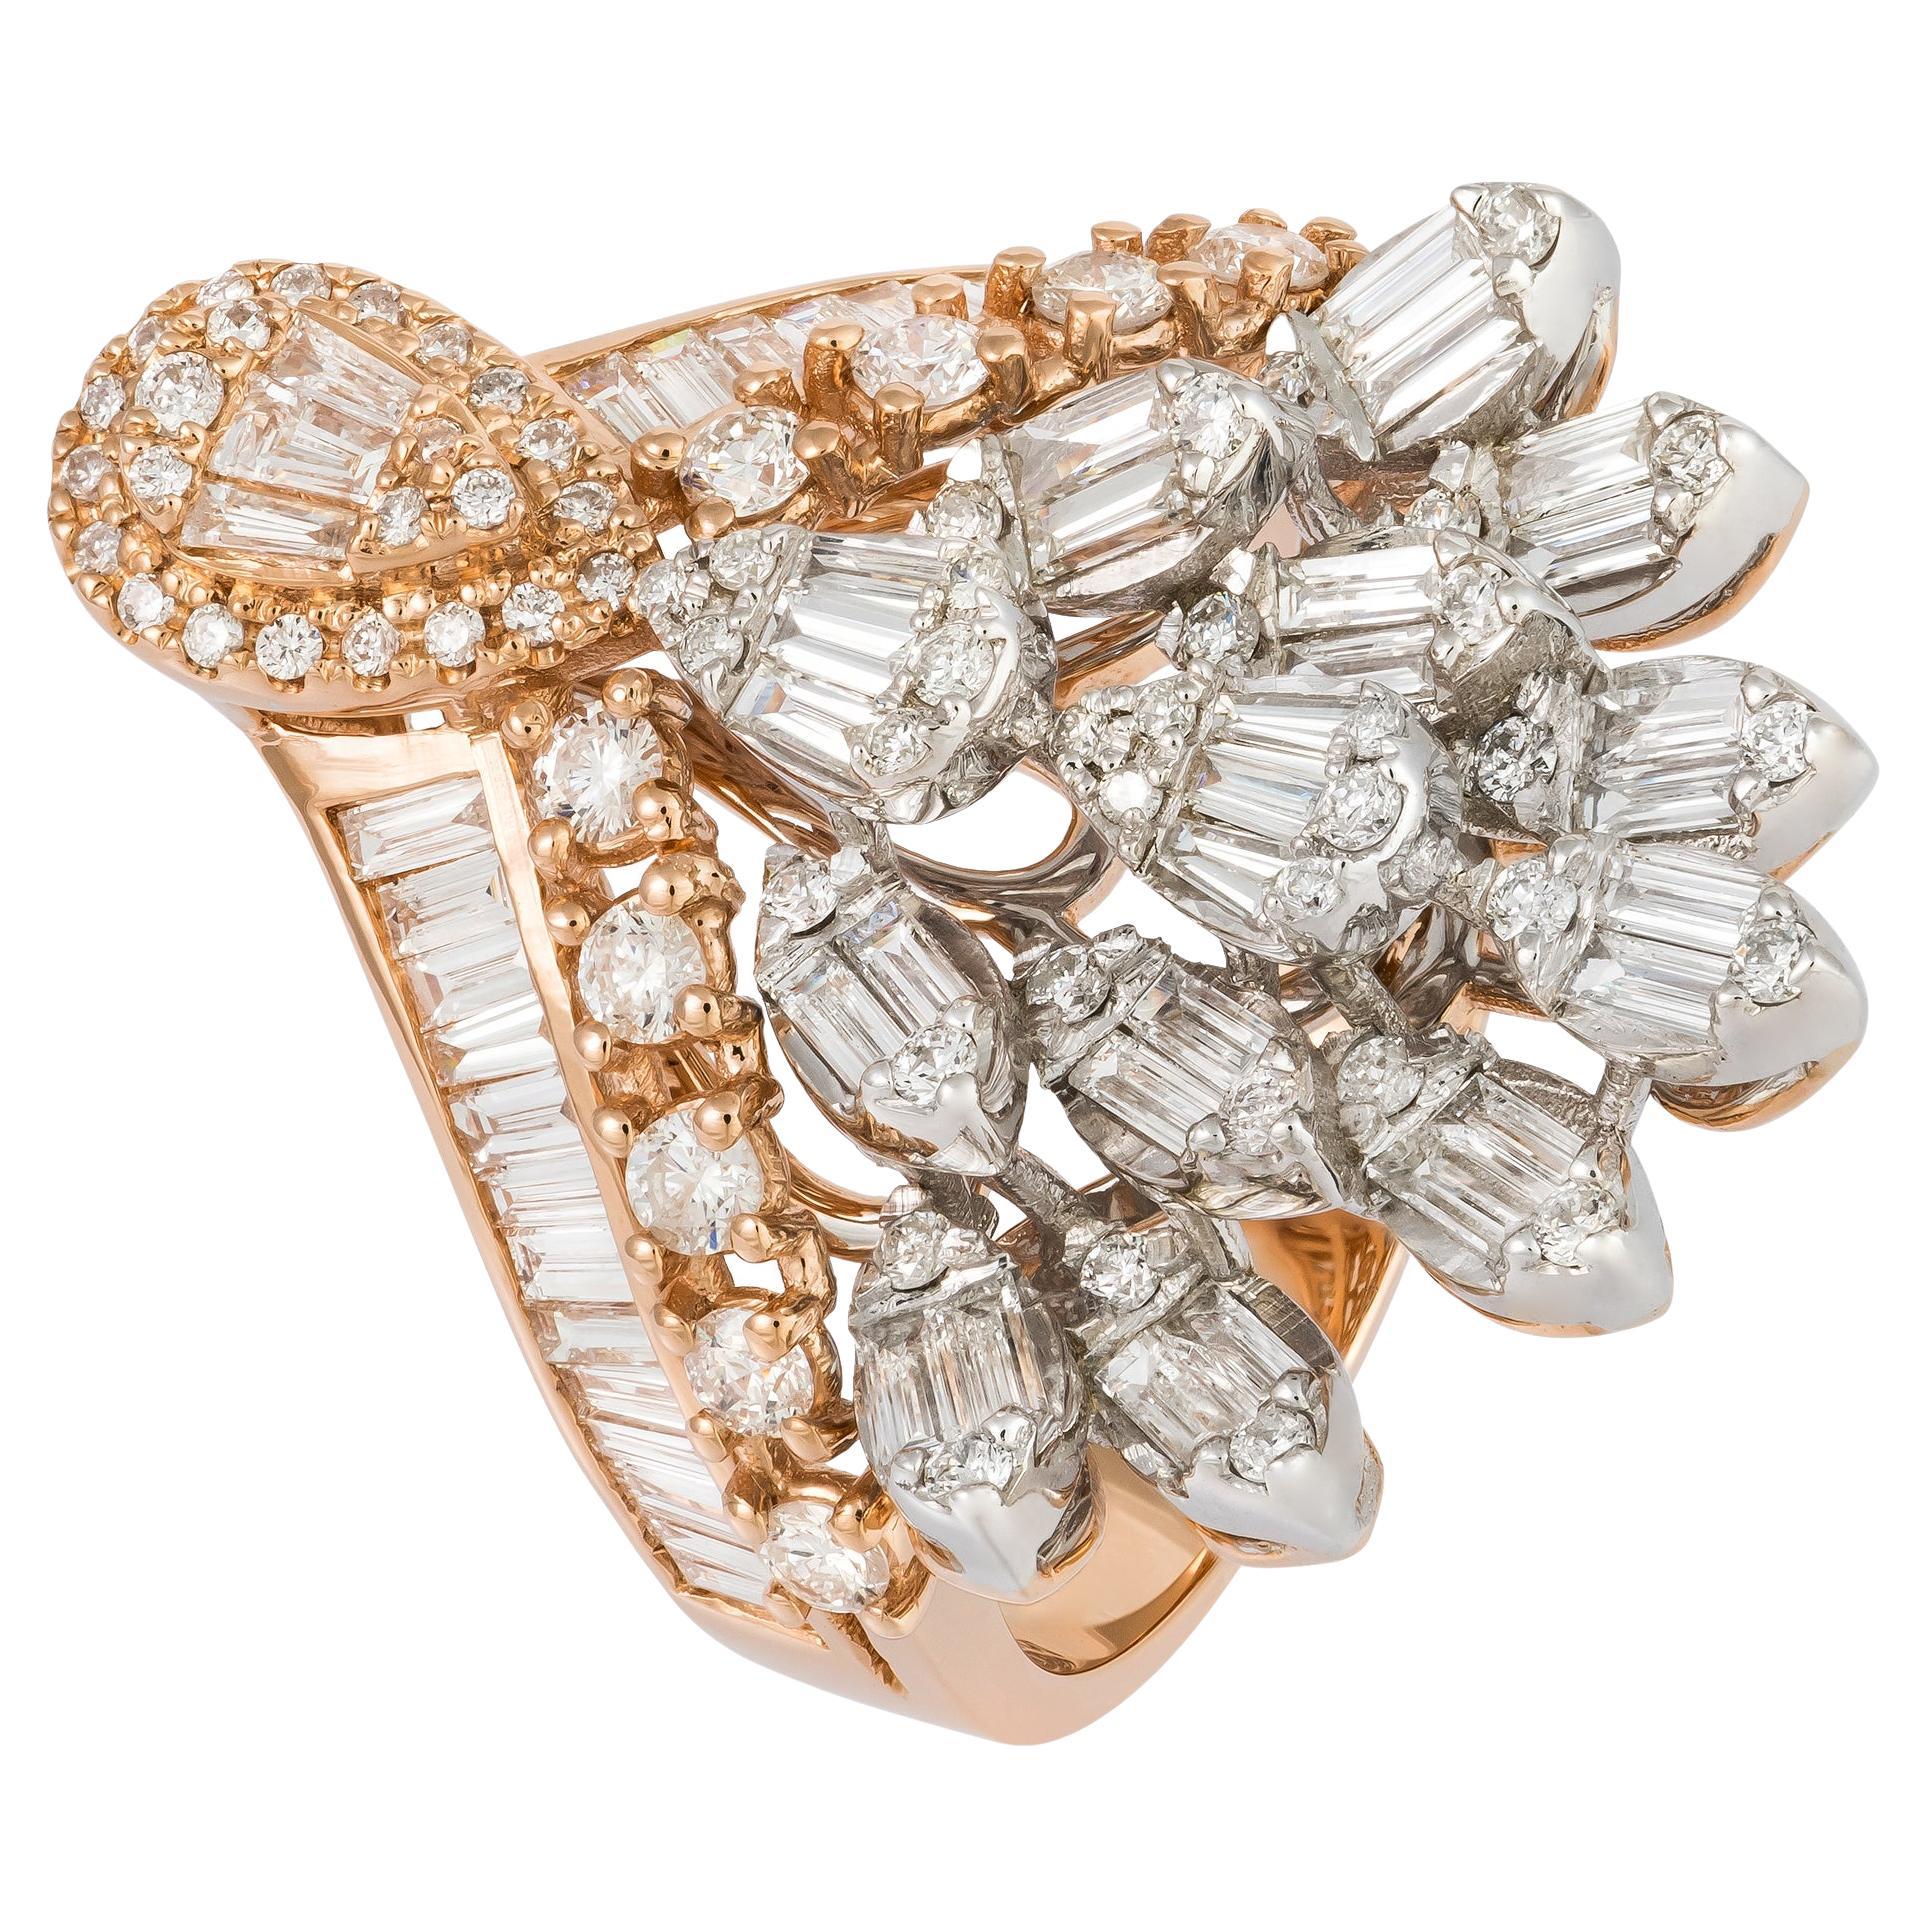 For Sale:  Sparkling  White Pink 18K Gold White Diamond Ring For Her